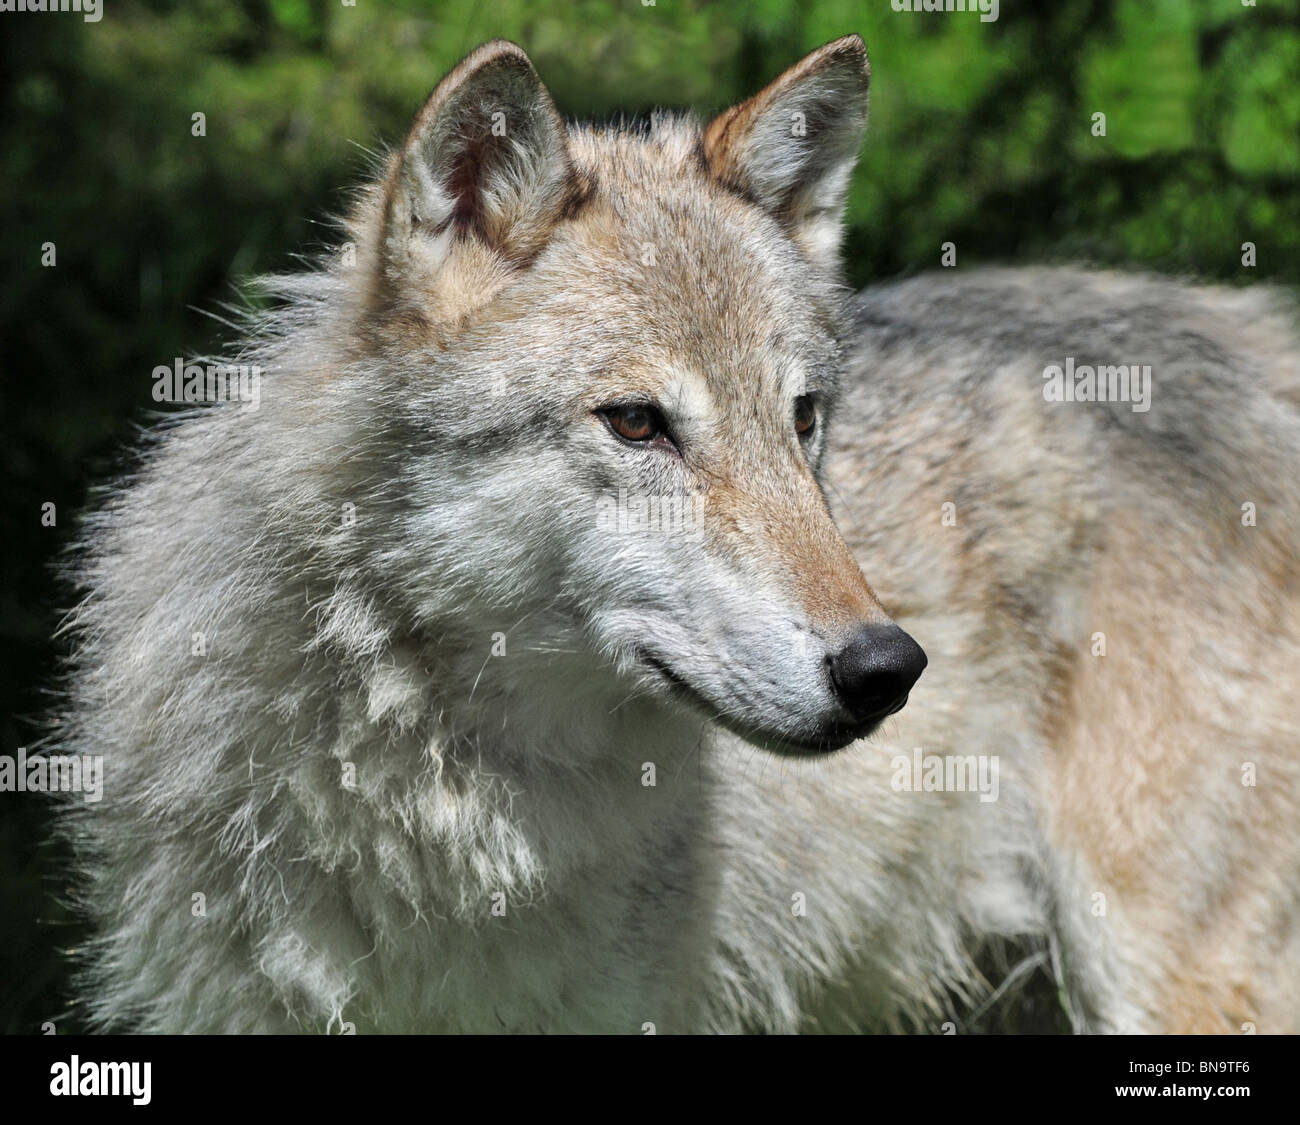 [Image: grey-female-tundra-wolf-BN9TF6.jpg]